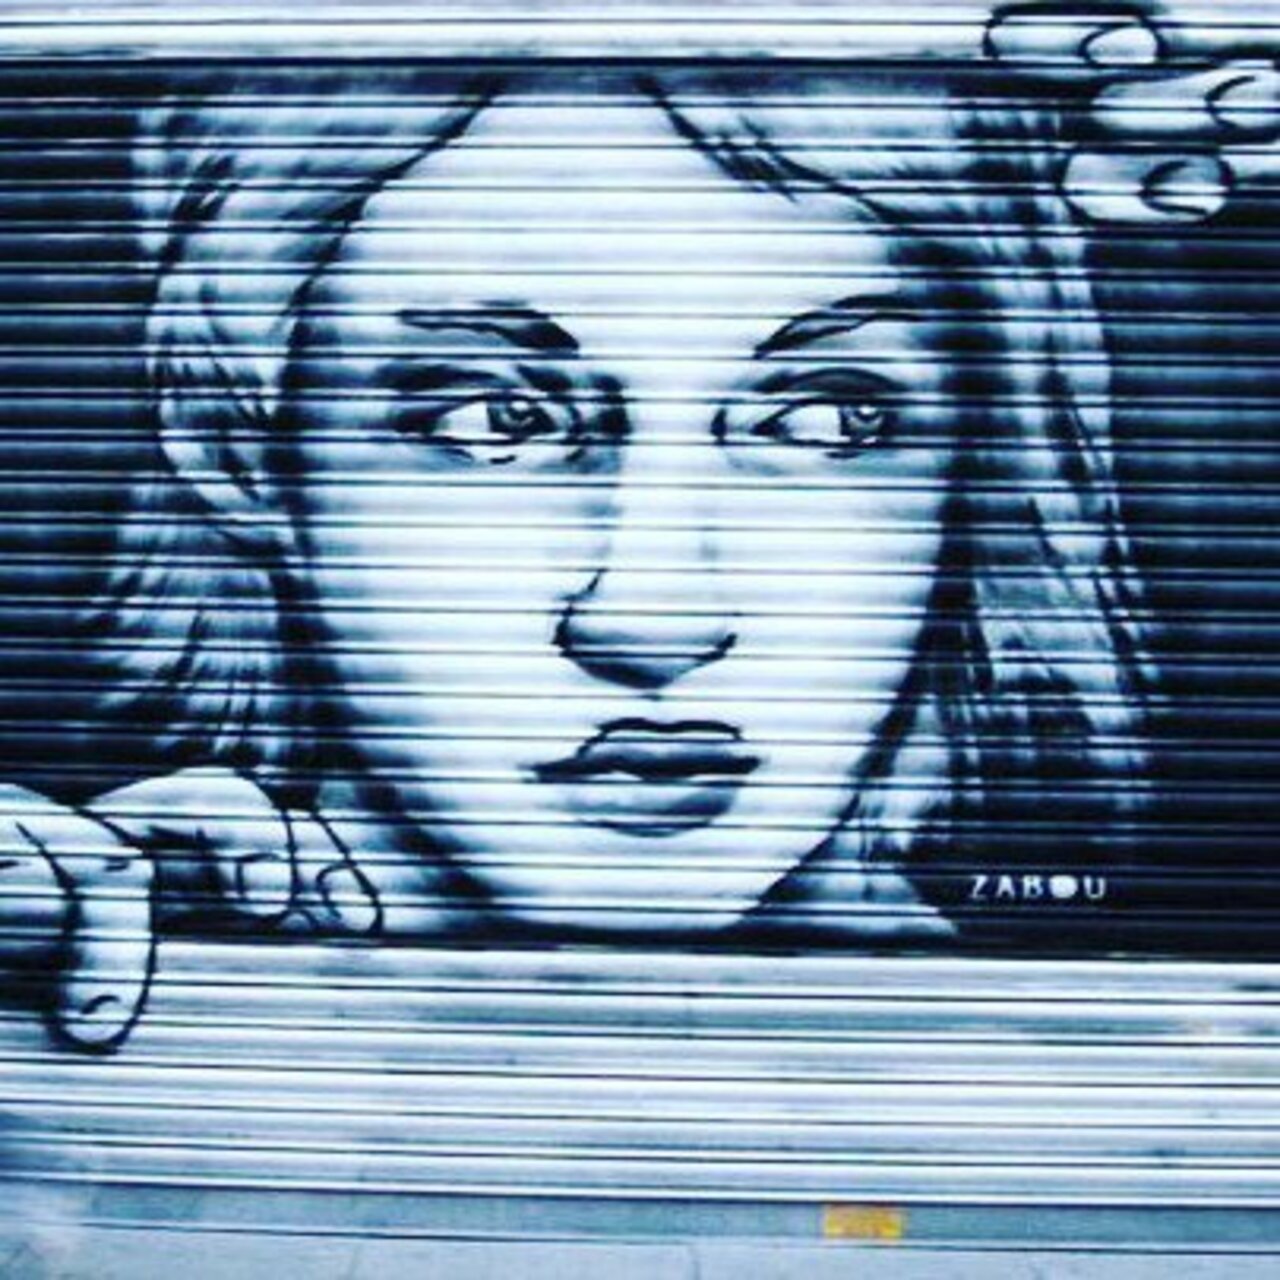 StArtEverywhere: #zabouartist #streetart #art #graffiti #wallart #urbanart #zabou #londonstreetart #paris #streeta… https://t.co/91Be4uFHZ1